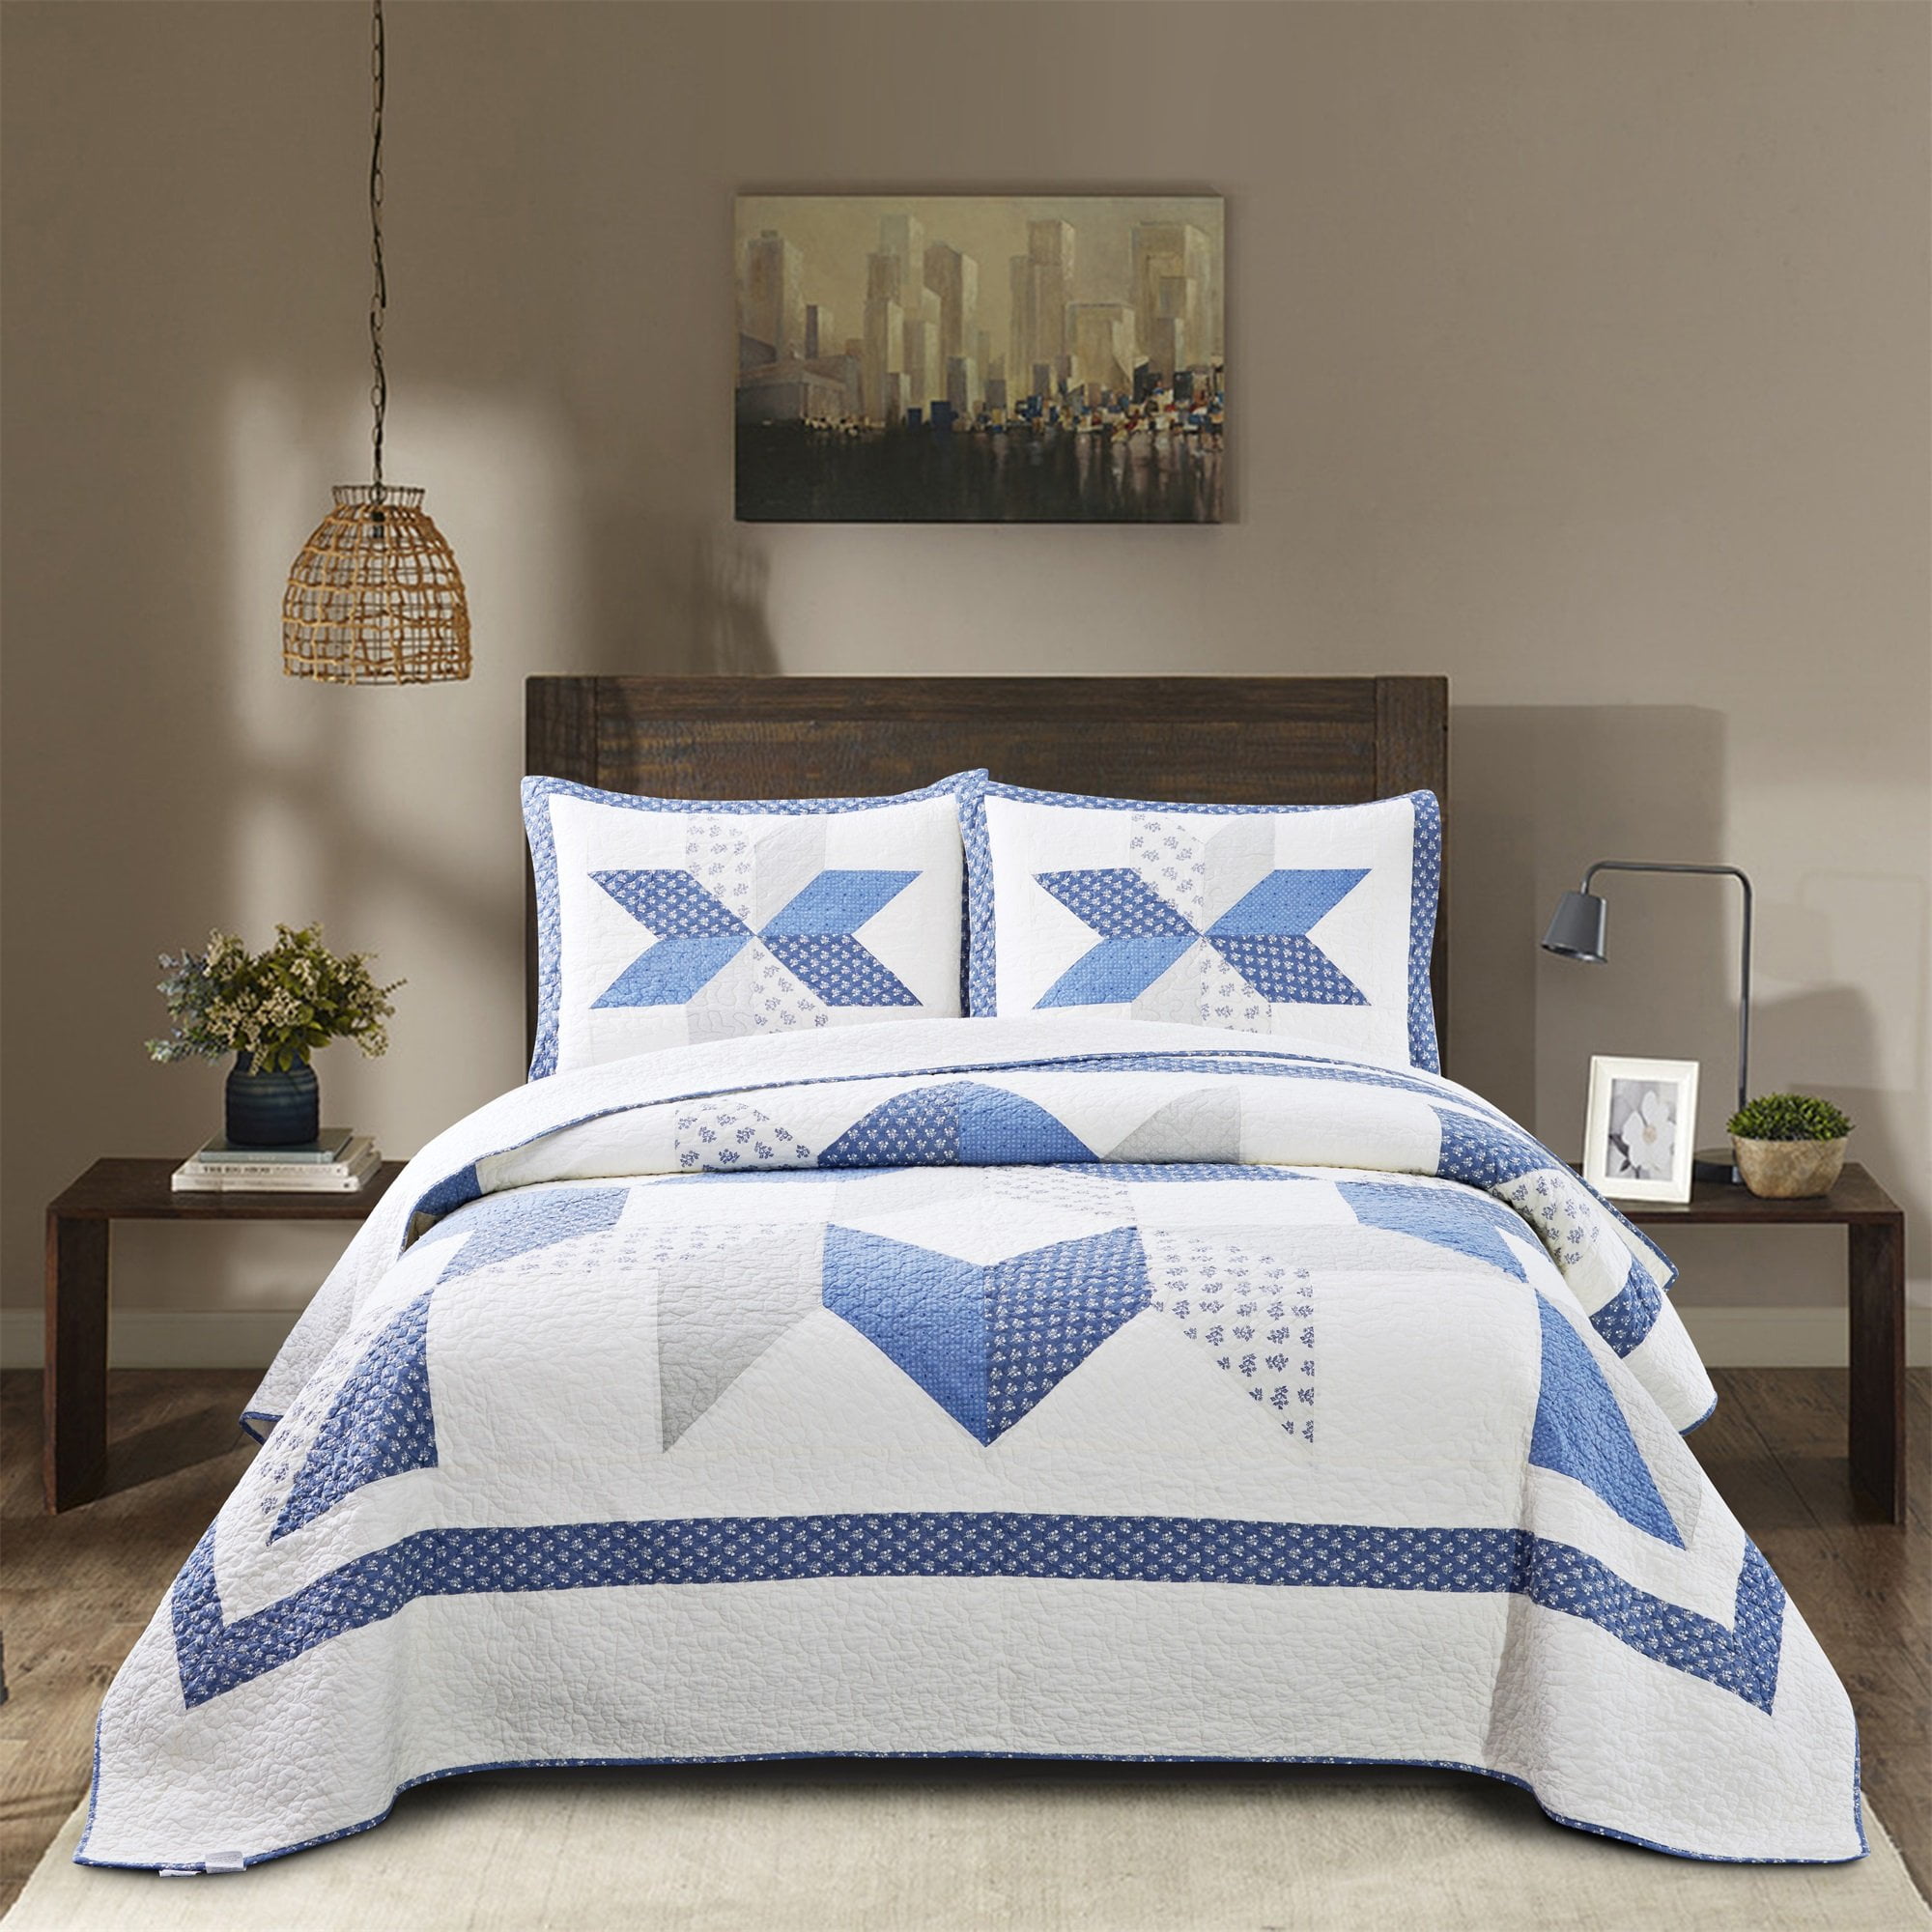 Details about   Mint Quilted Bedspread & Pillow Shams Set Pastel Dahlia Blossoms Print 